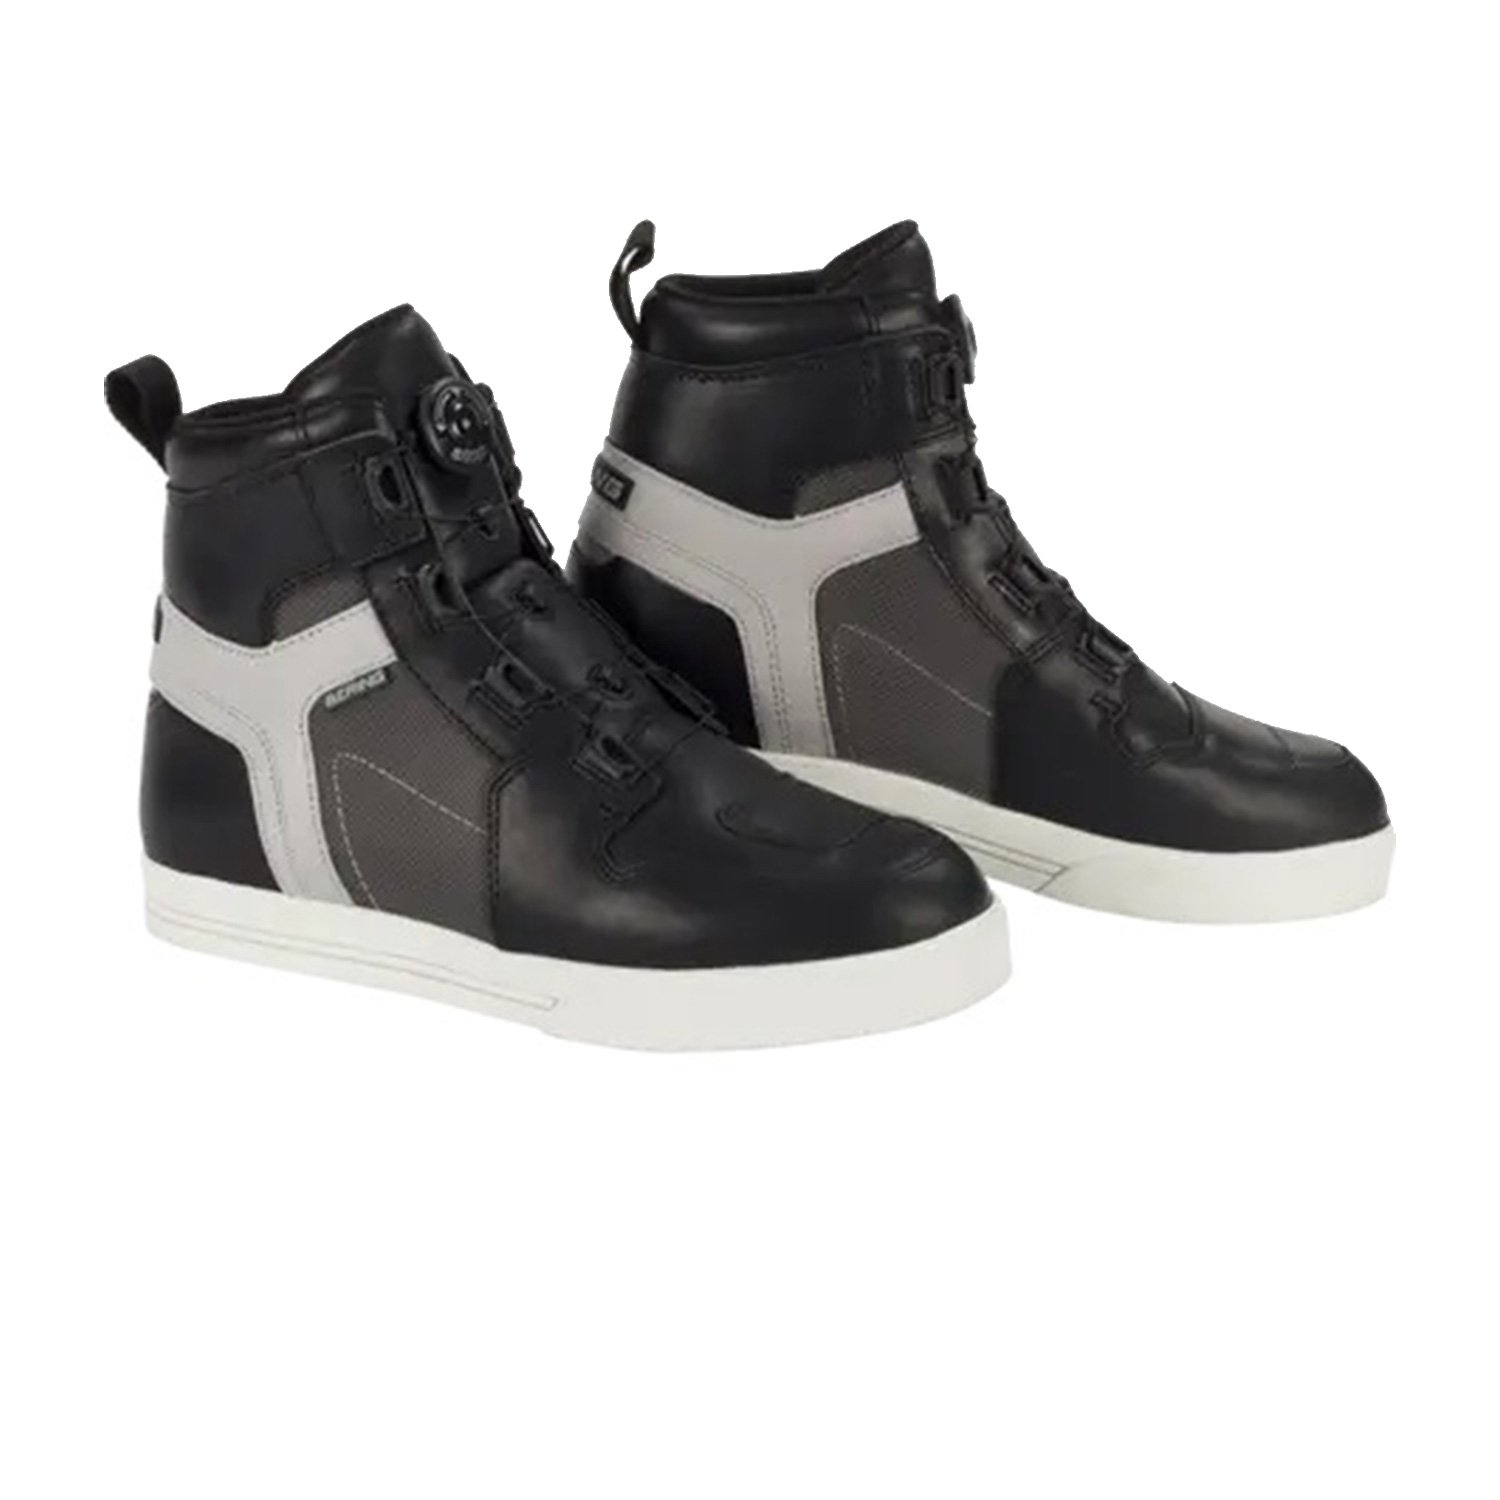 Image of Bering Sneakers Reflex Vented Black Grey Size 41 EN